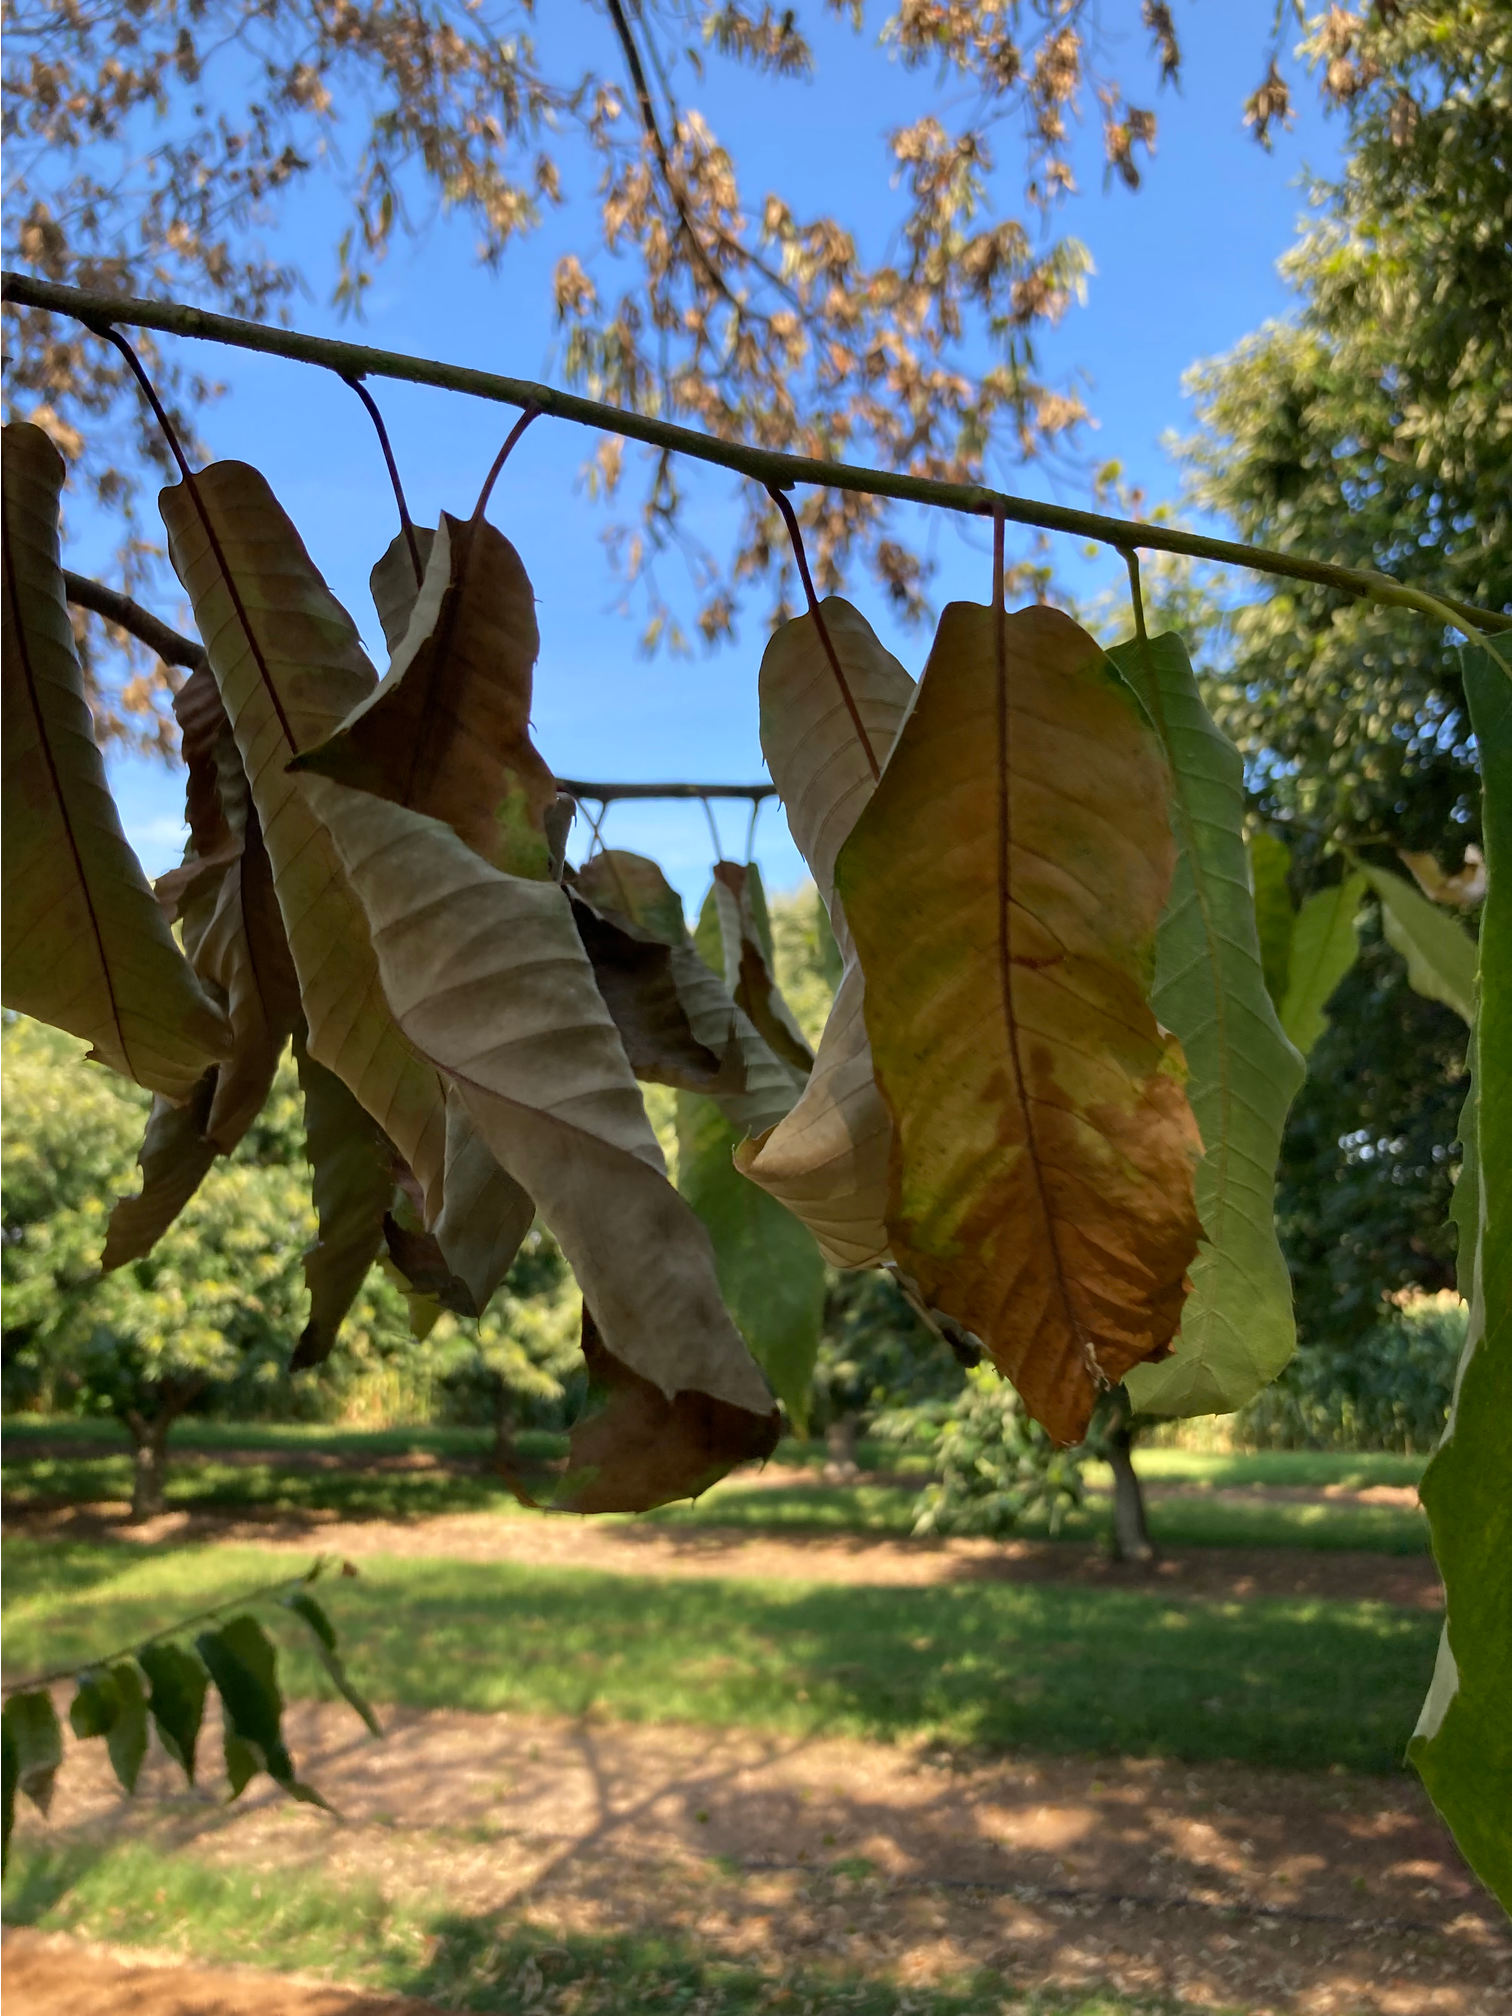 Leaves on chestnut trees affected by oak wilt.